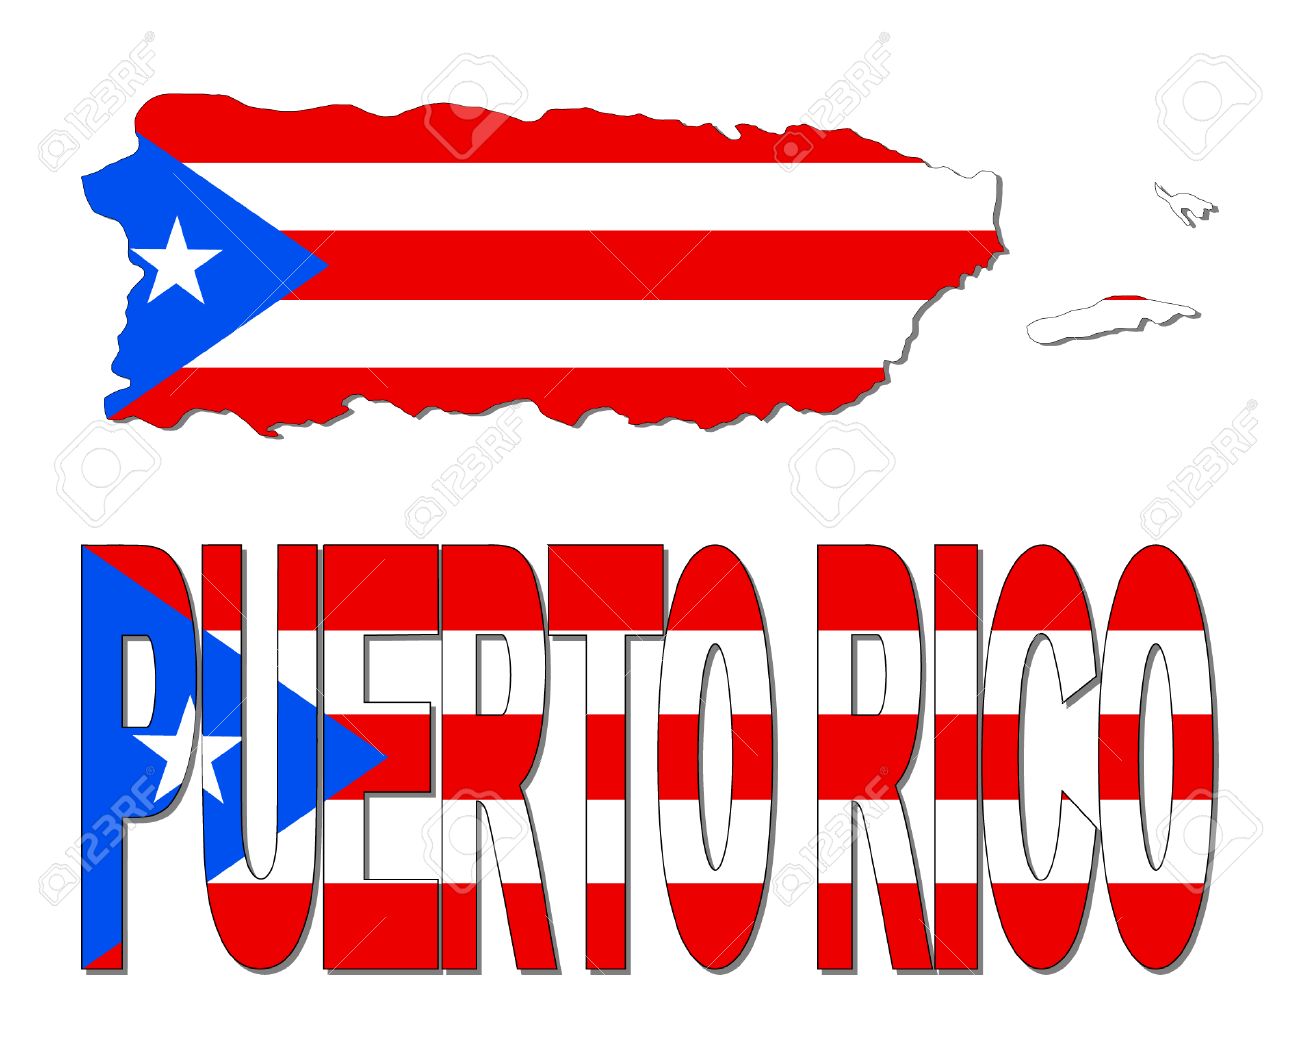 Puerto Rico Map Clipart & Free Clip Art Images #25991.